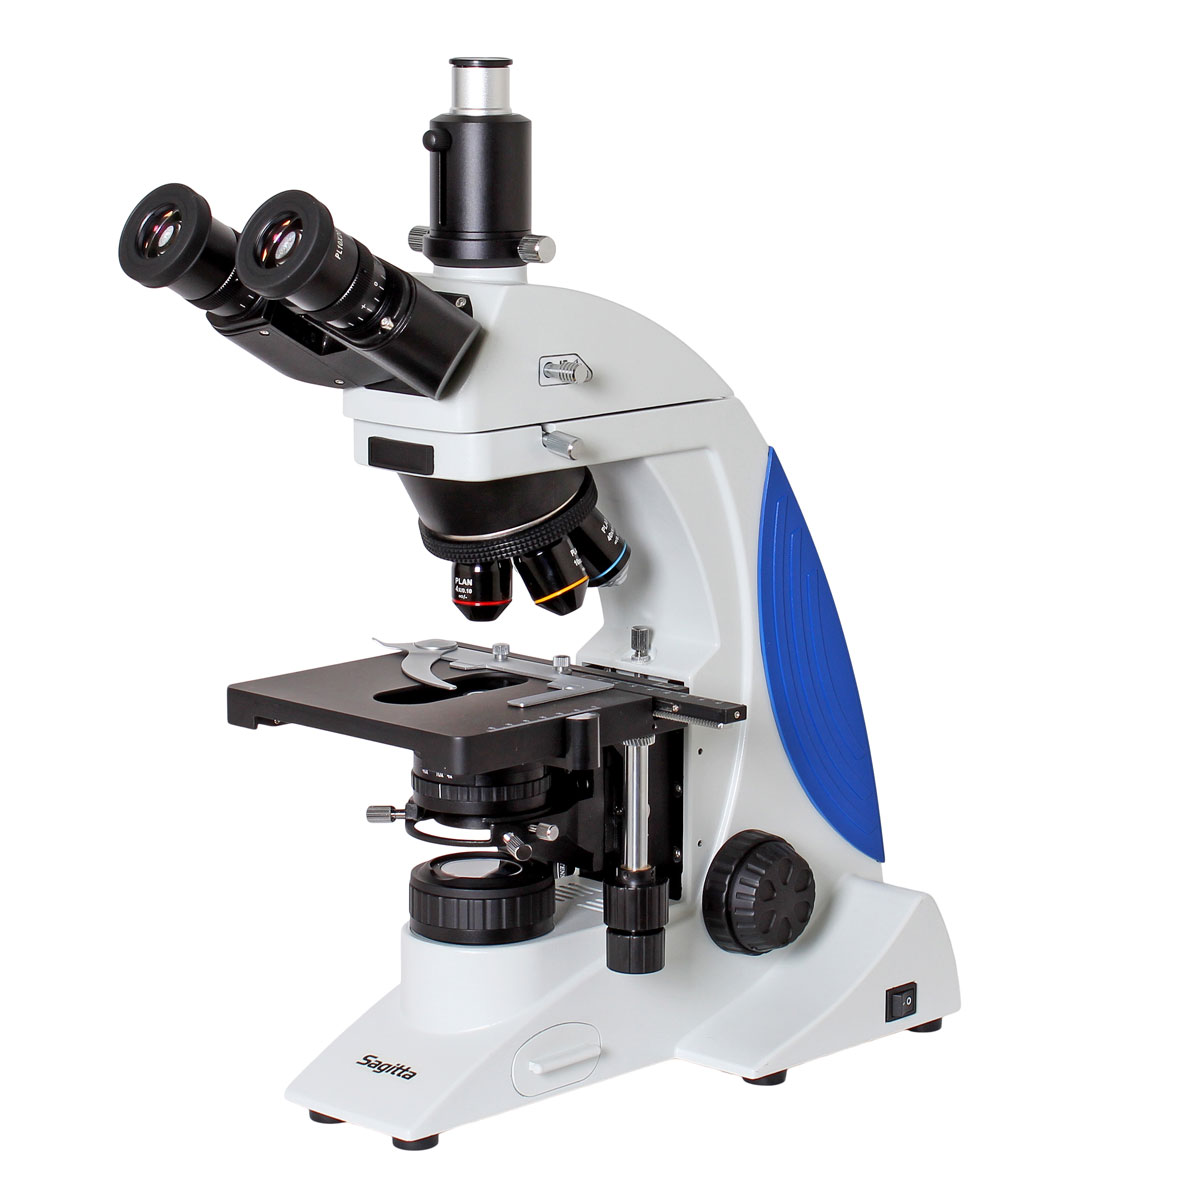 Mikroskop trinokulärt SL-700